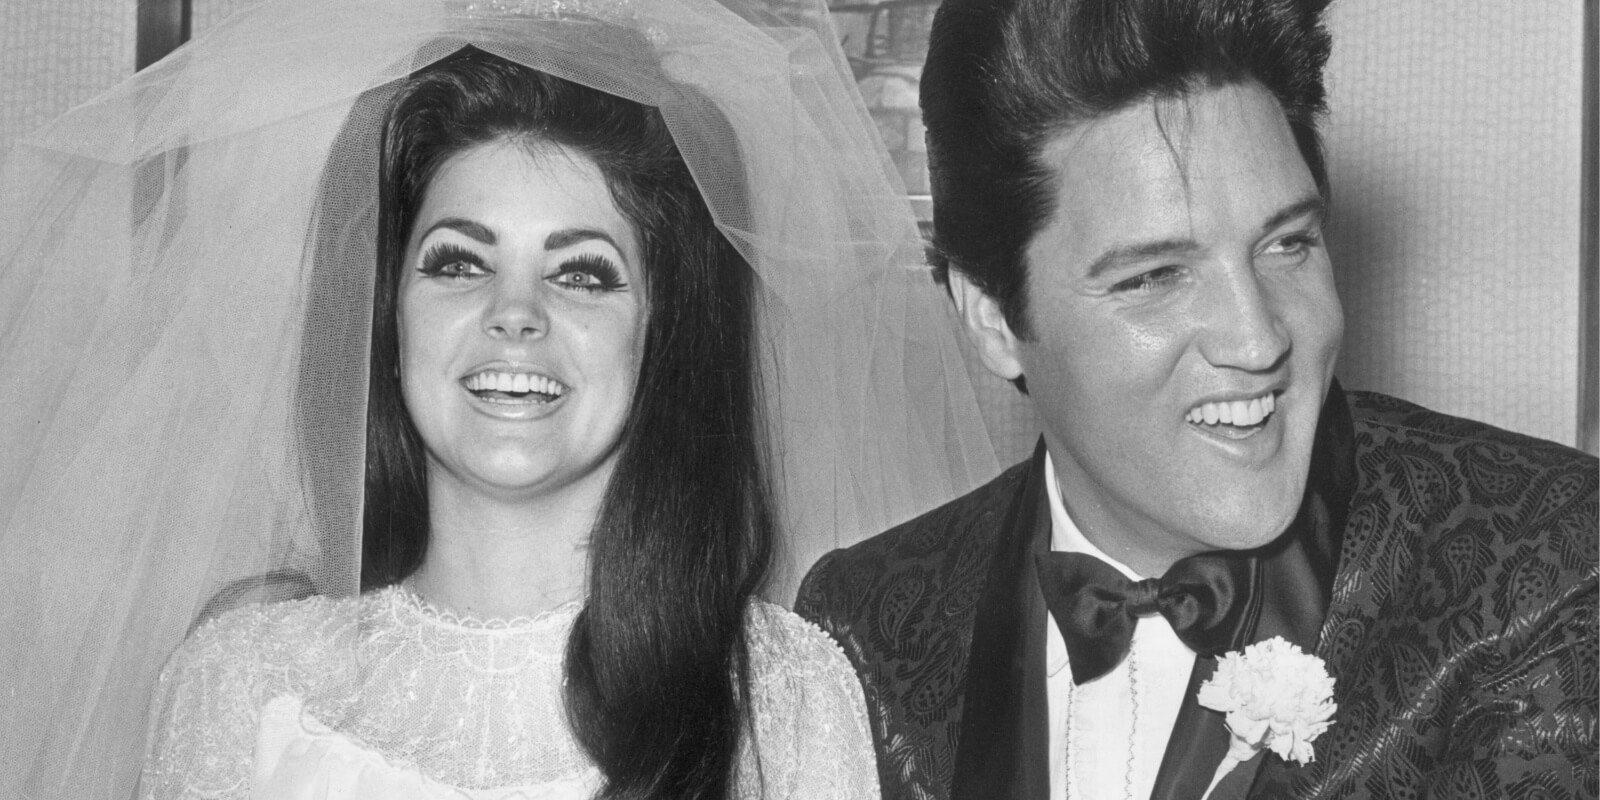 Priscilla Presley and Elvis Presley on their wedding day, May 1, 1967.